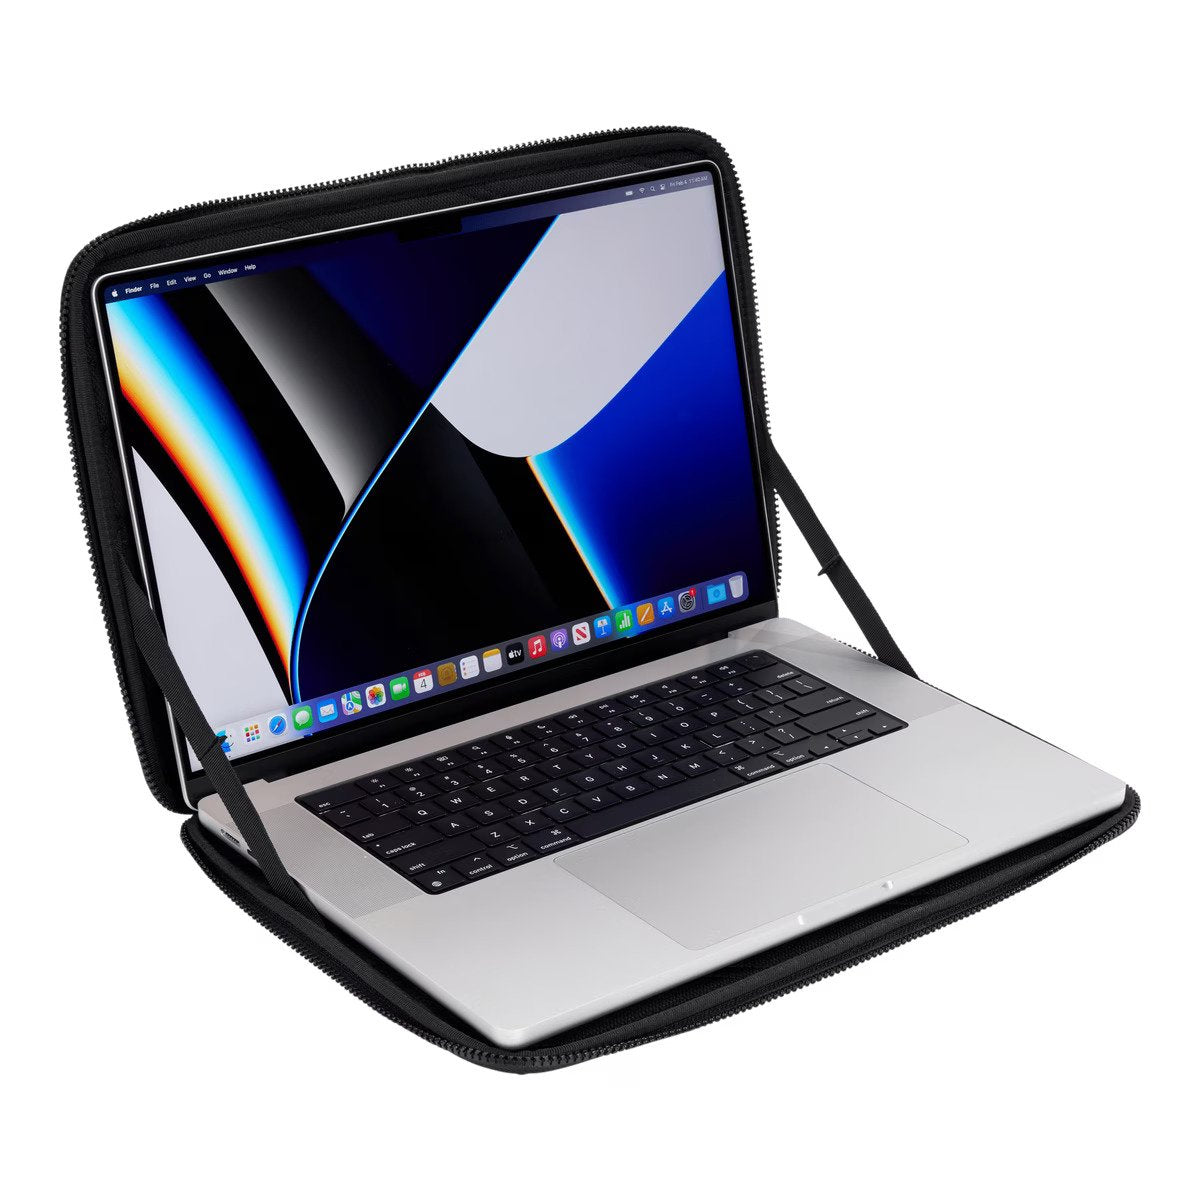 Thule Gauntlet Støpt Etui For MacBook® Pro 16" Og Pc Blå